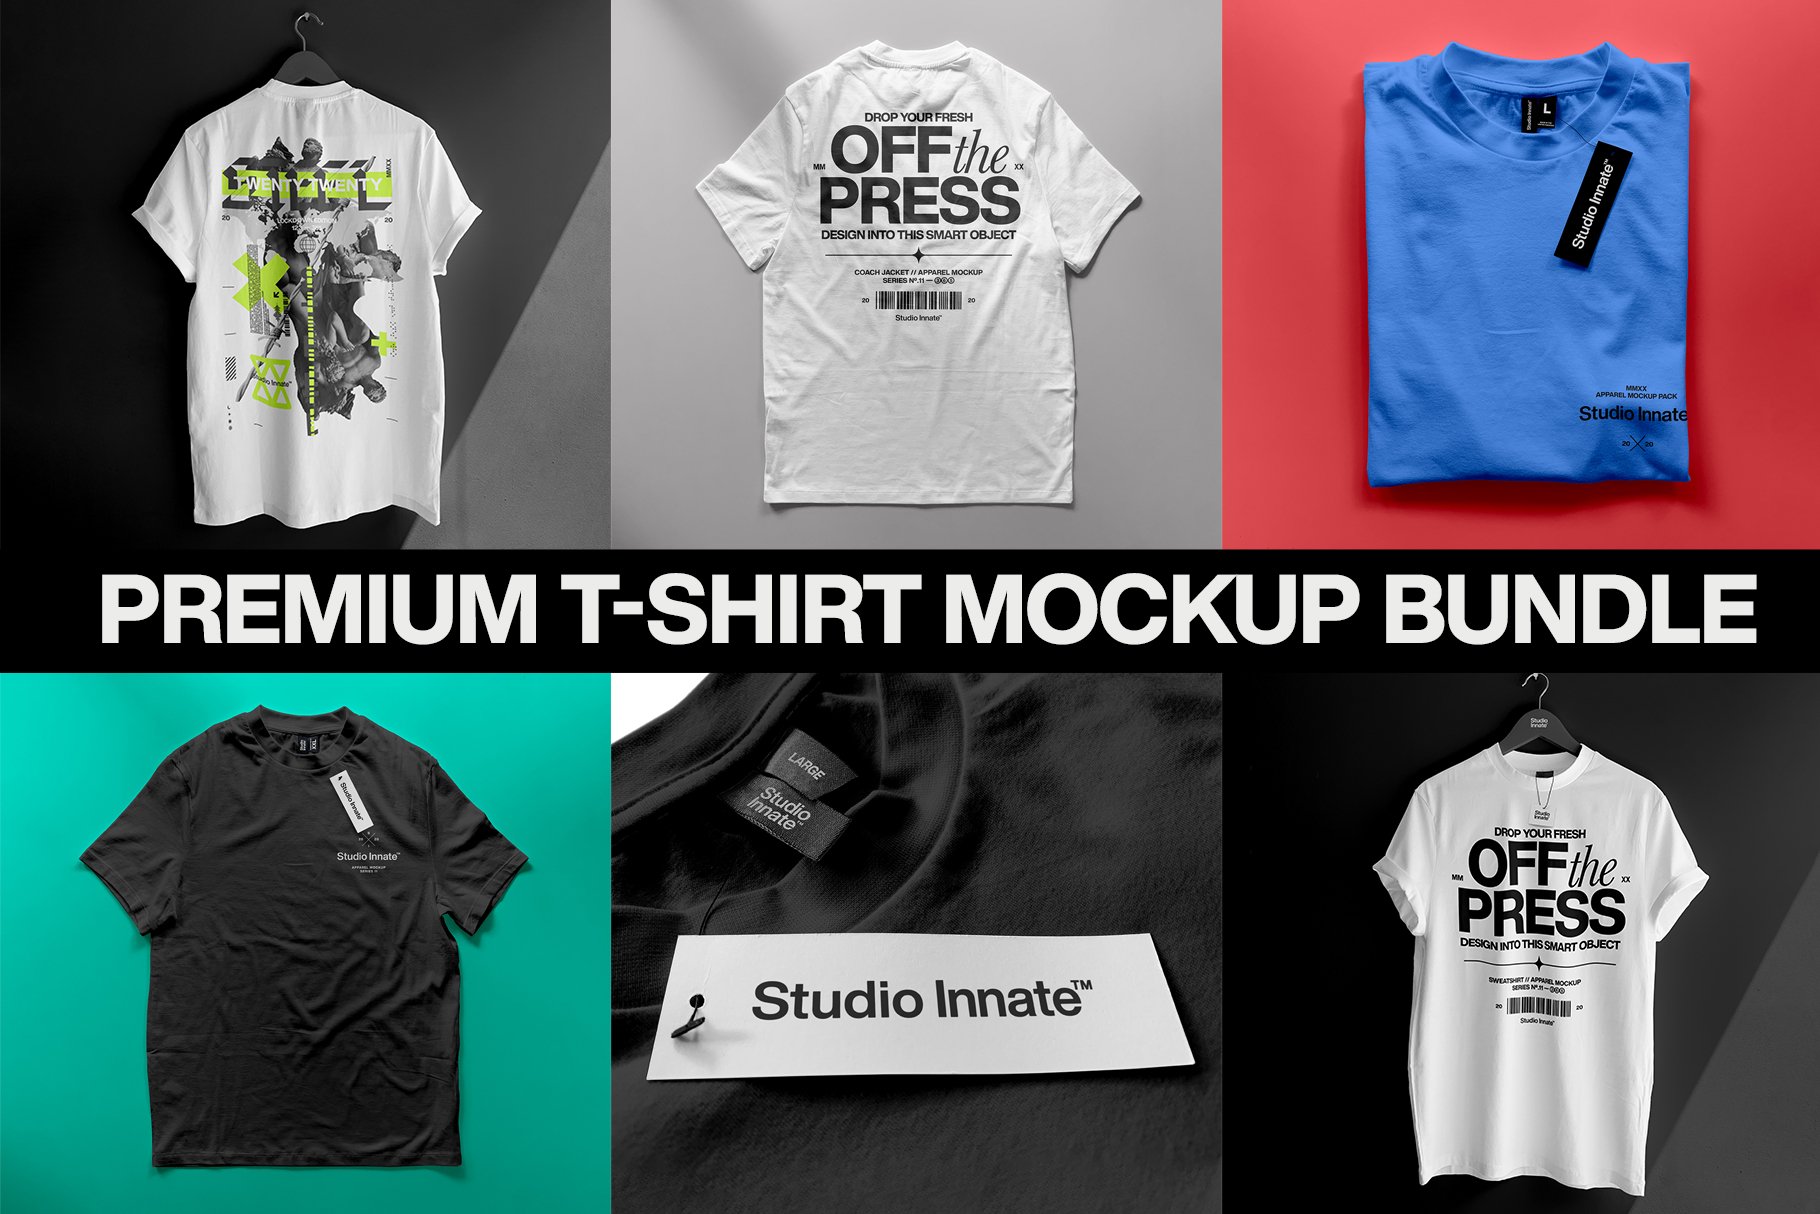 T-shirt Mockup - Bundle cover image.